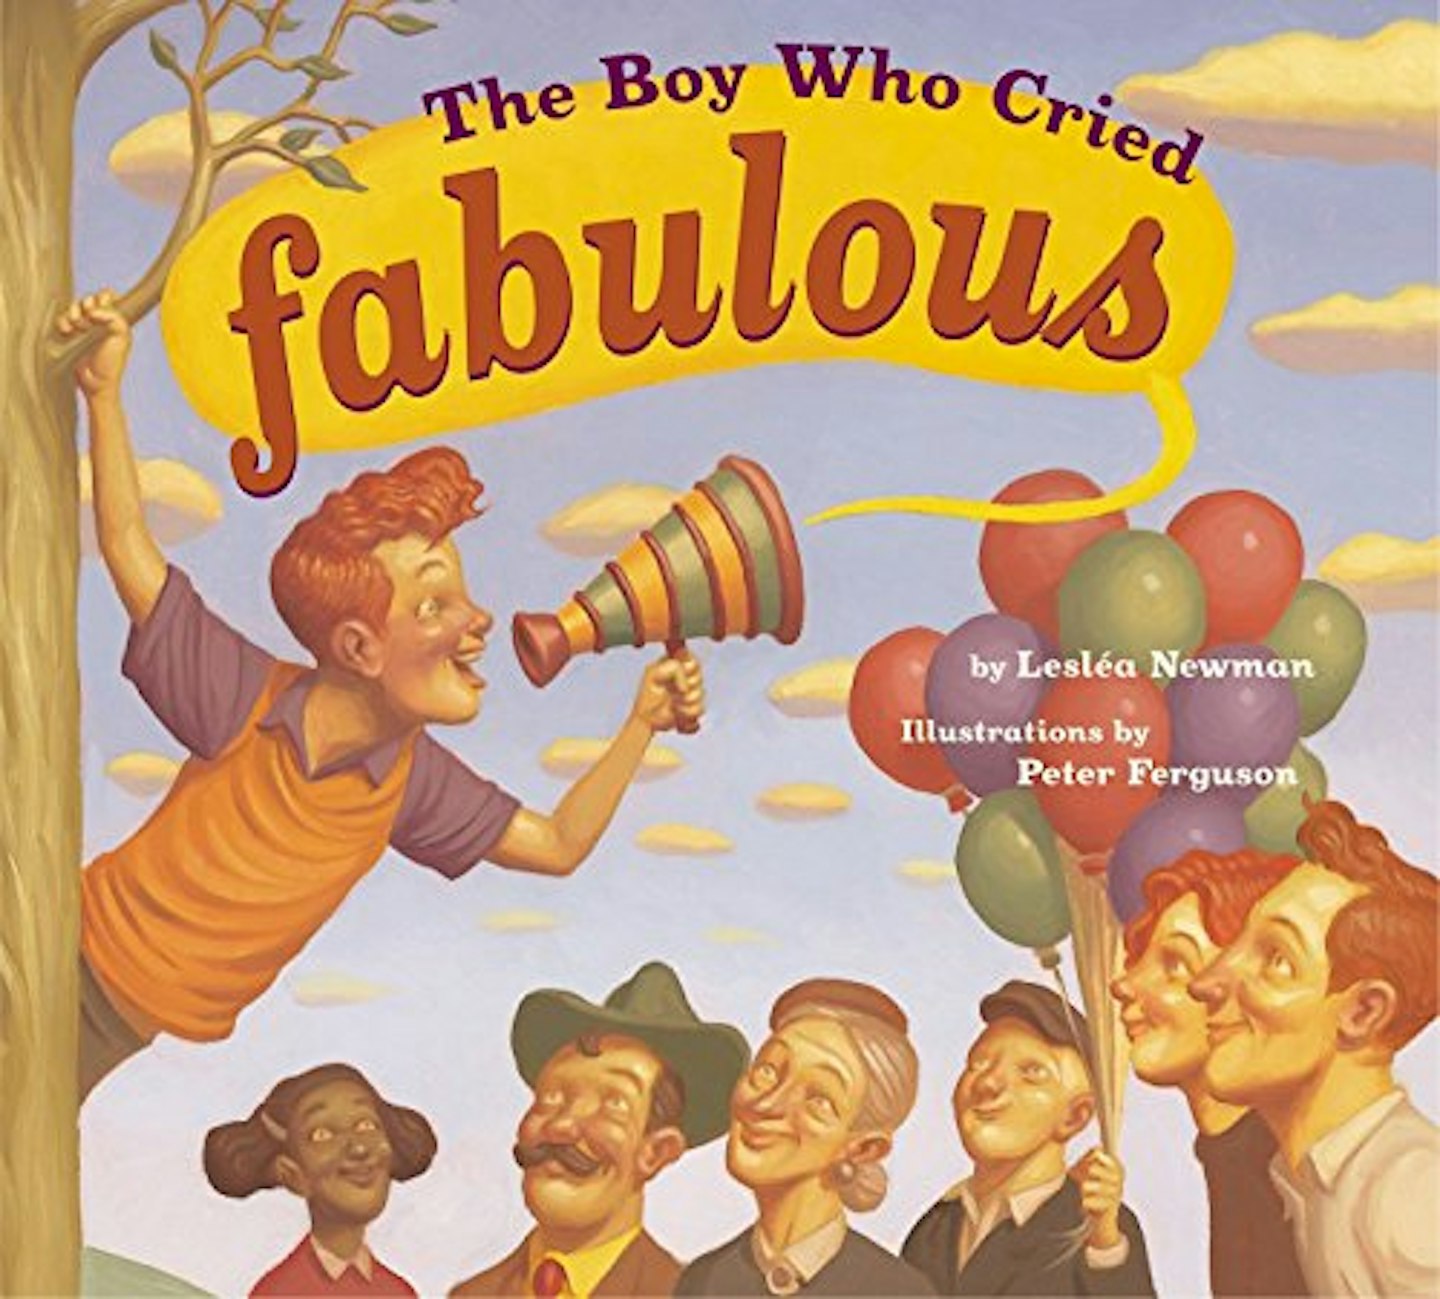 The Boy Who Cried Fabulous, Leslea Newman